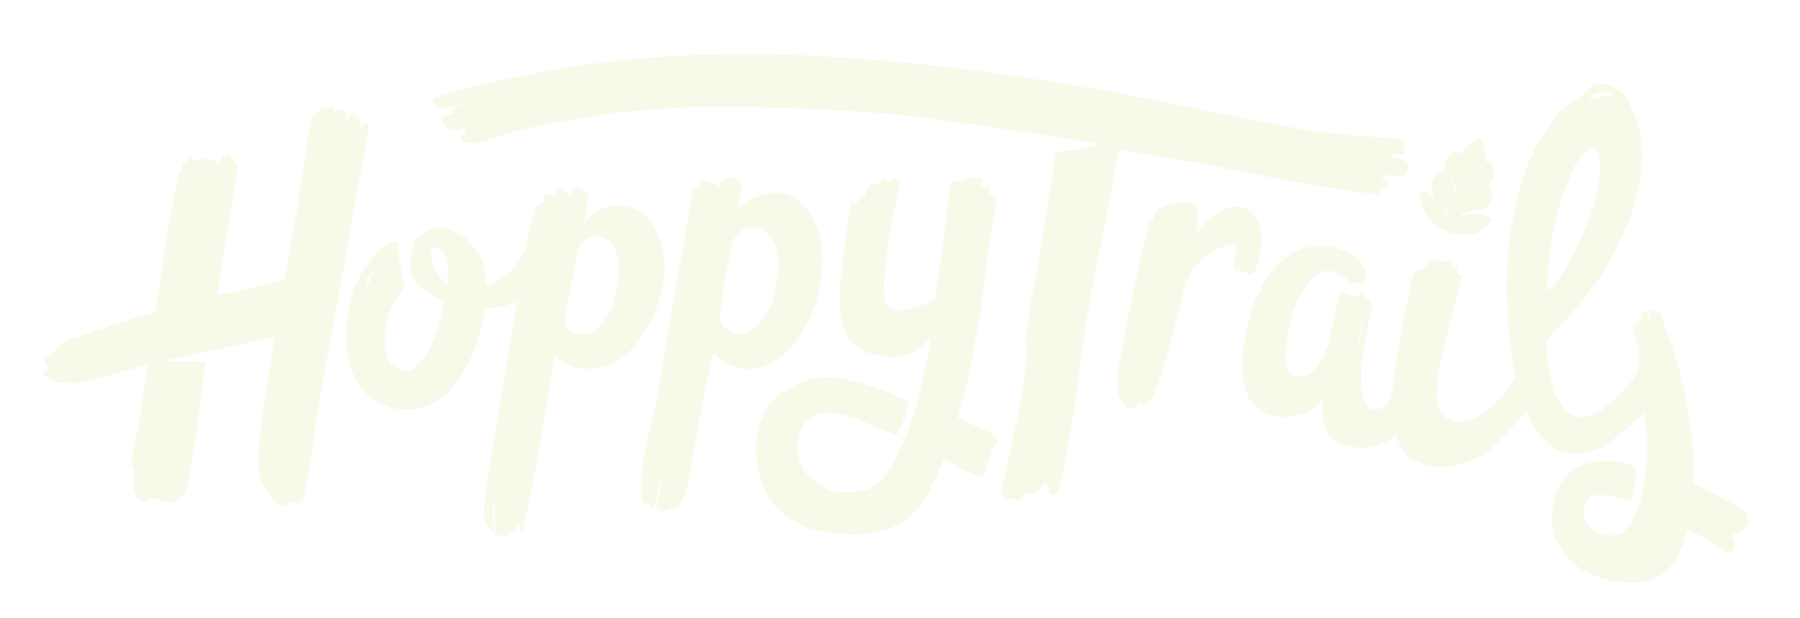 Hoppy Trails Mix Pack Logo - Stanley Park Brewing